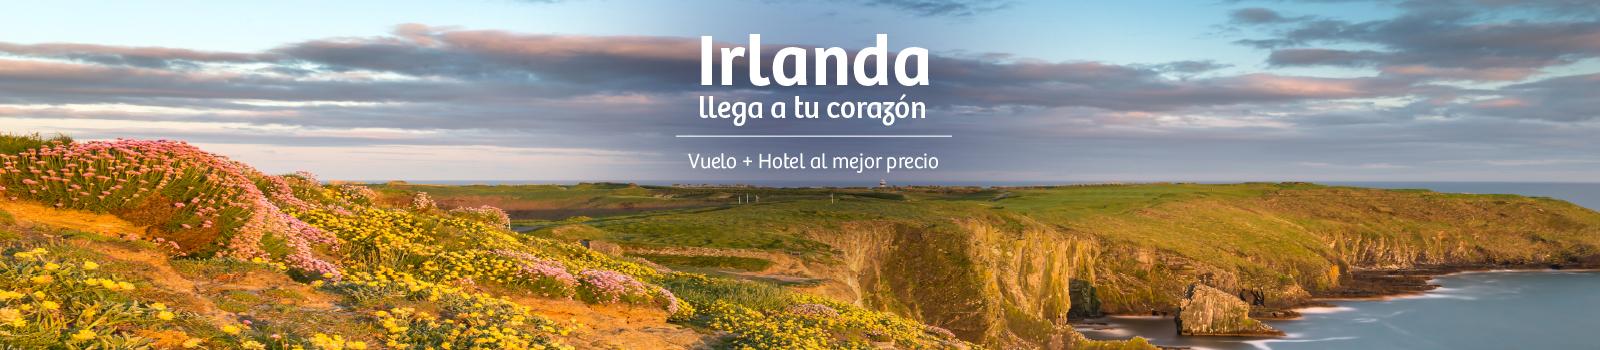 Vuelo + hotel: Cork Irlanda ¡ULTIMA HORA! desde Madrid